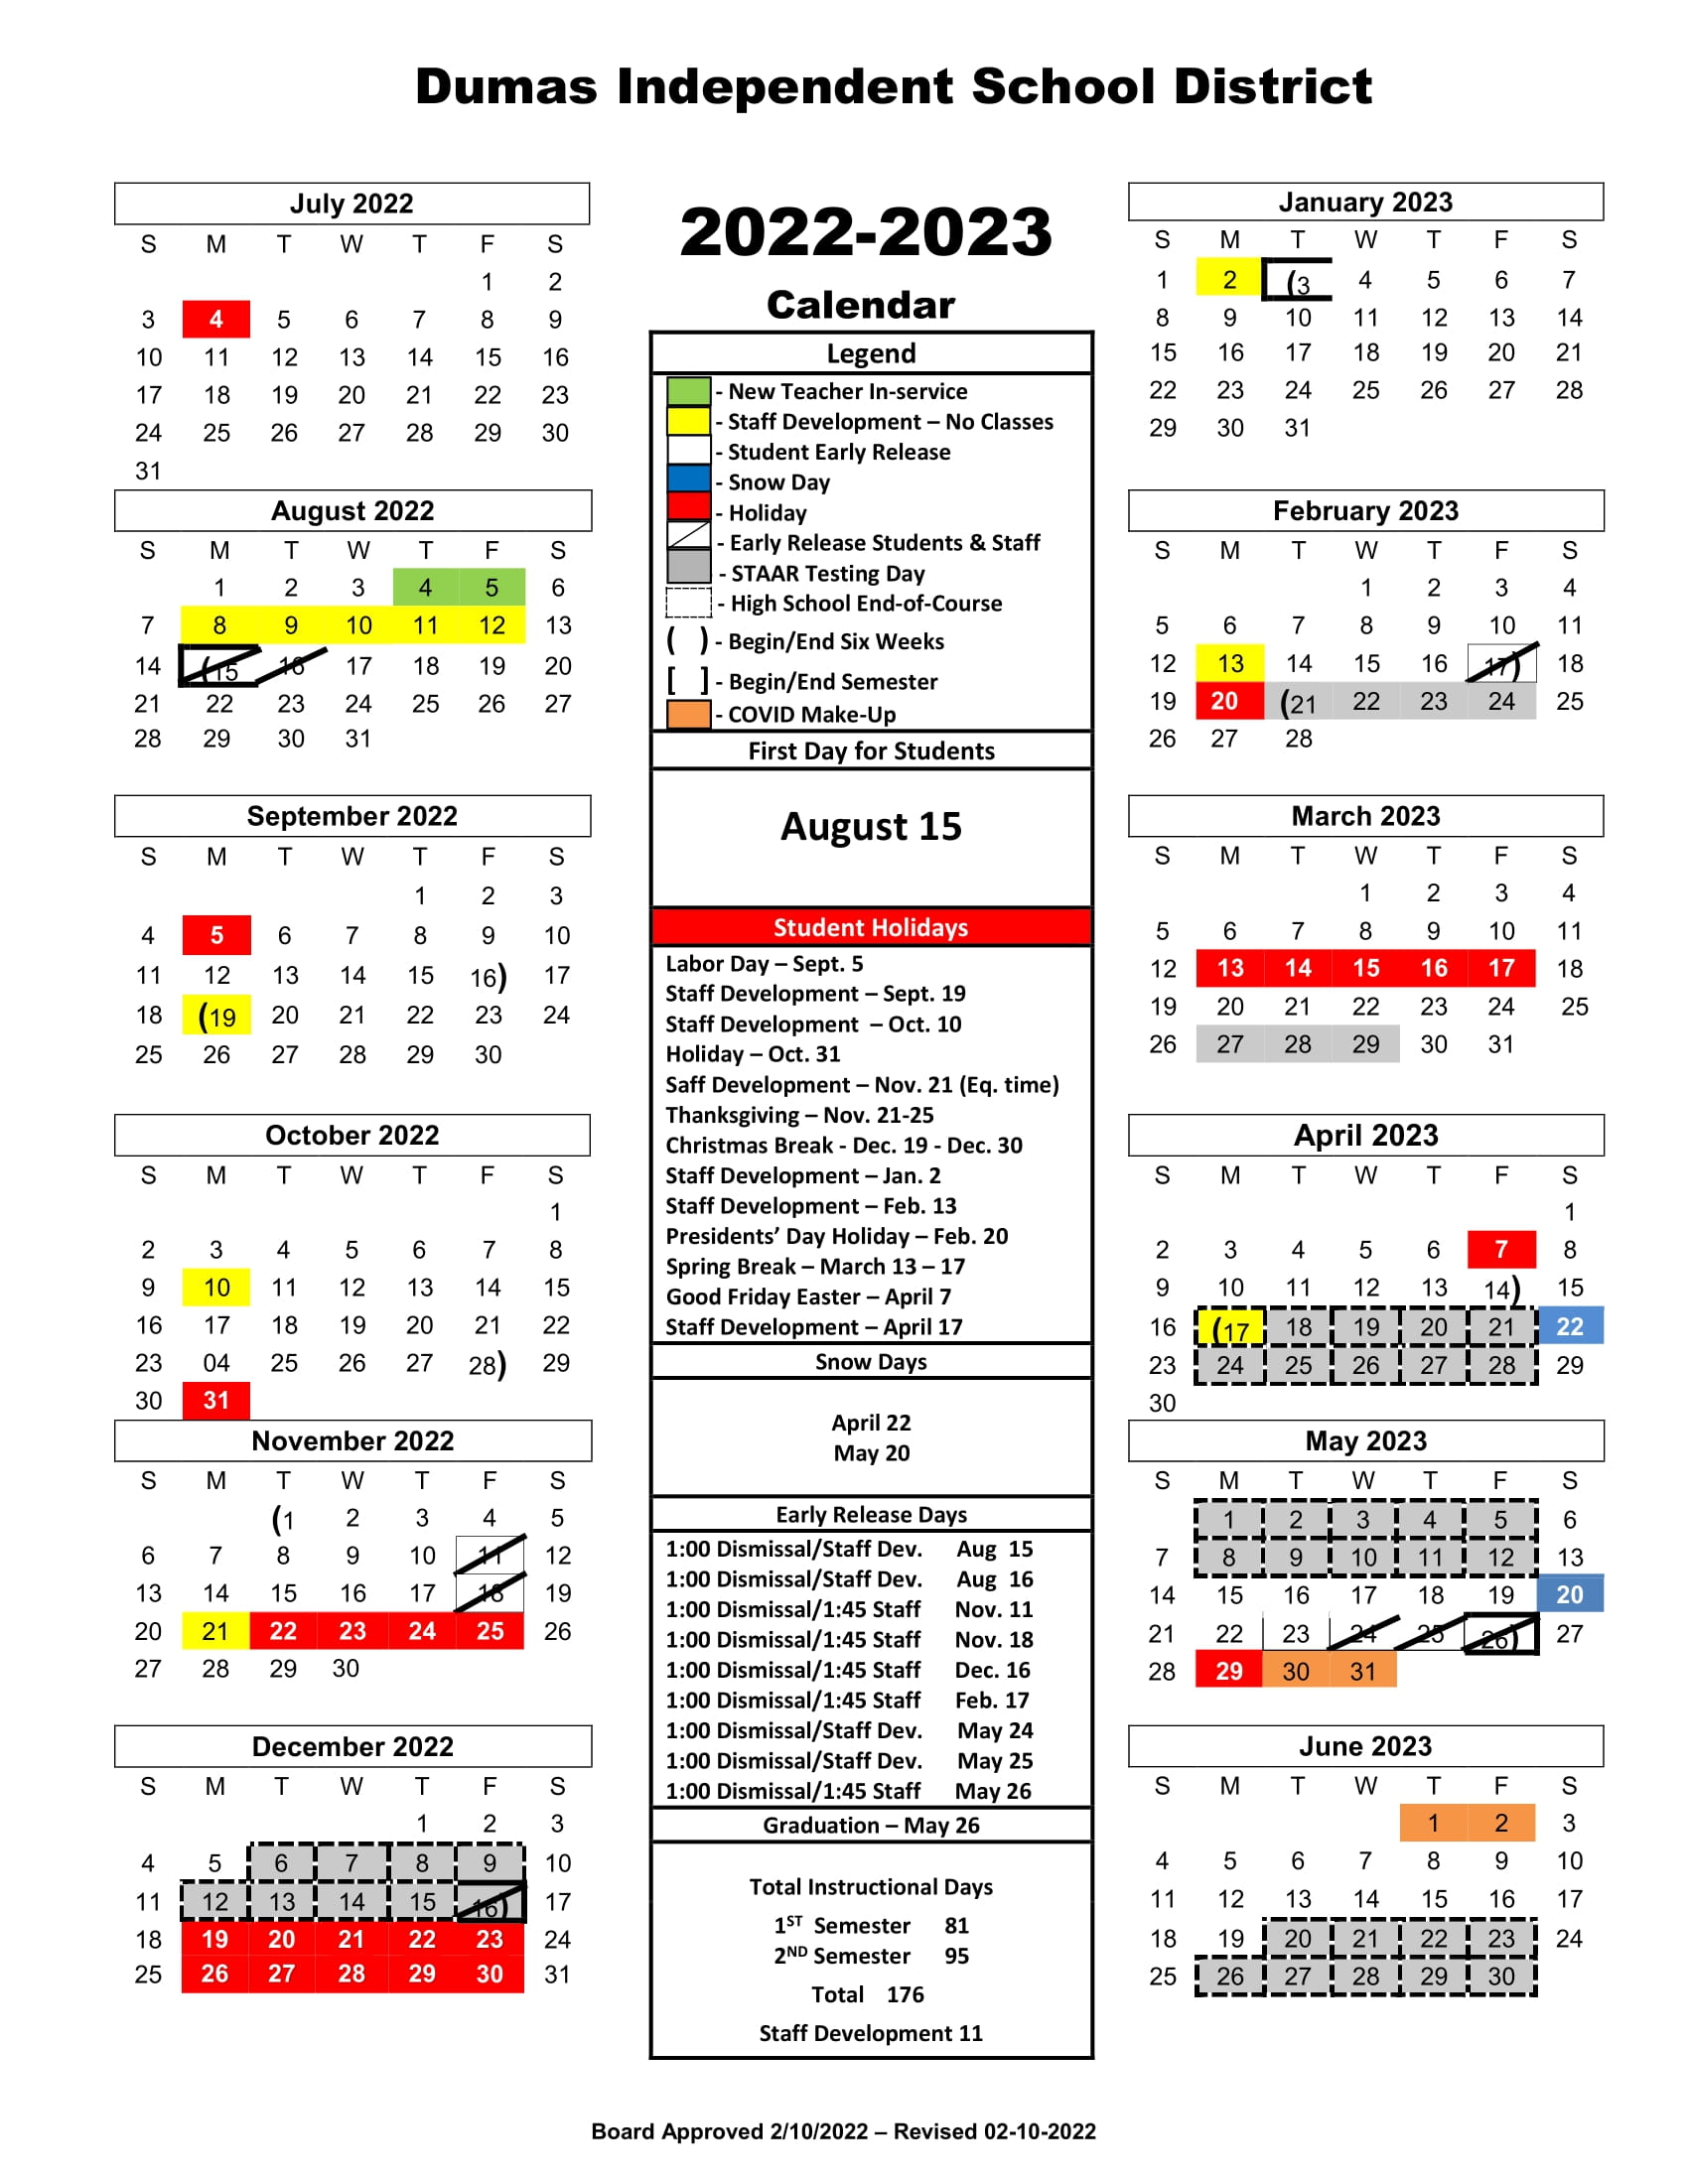 Disd 2022 Calendar Dumas Isd 2022-2023 Calendar - Moore County Journal